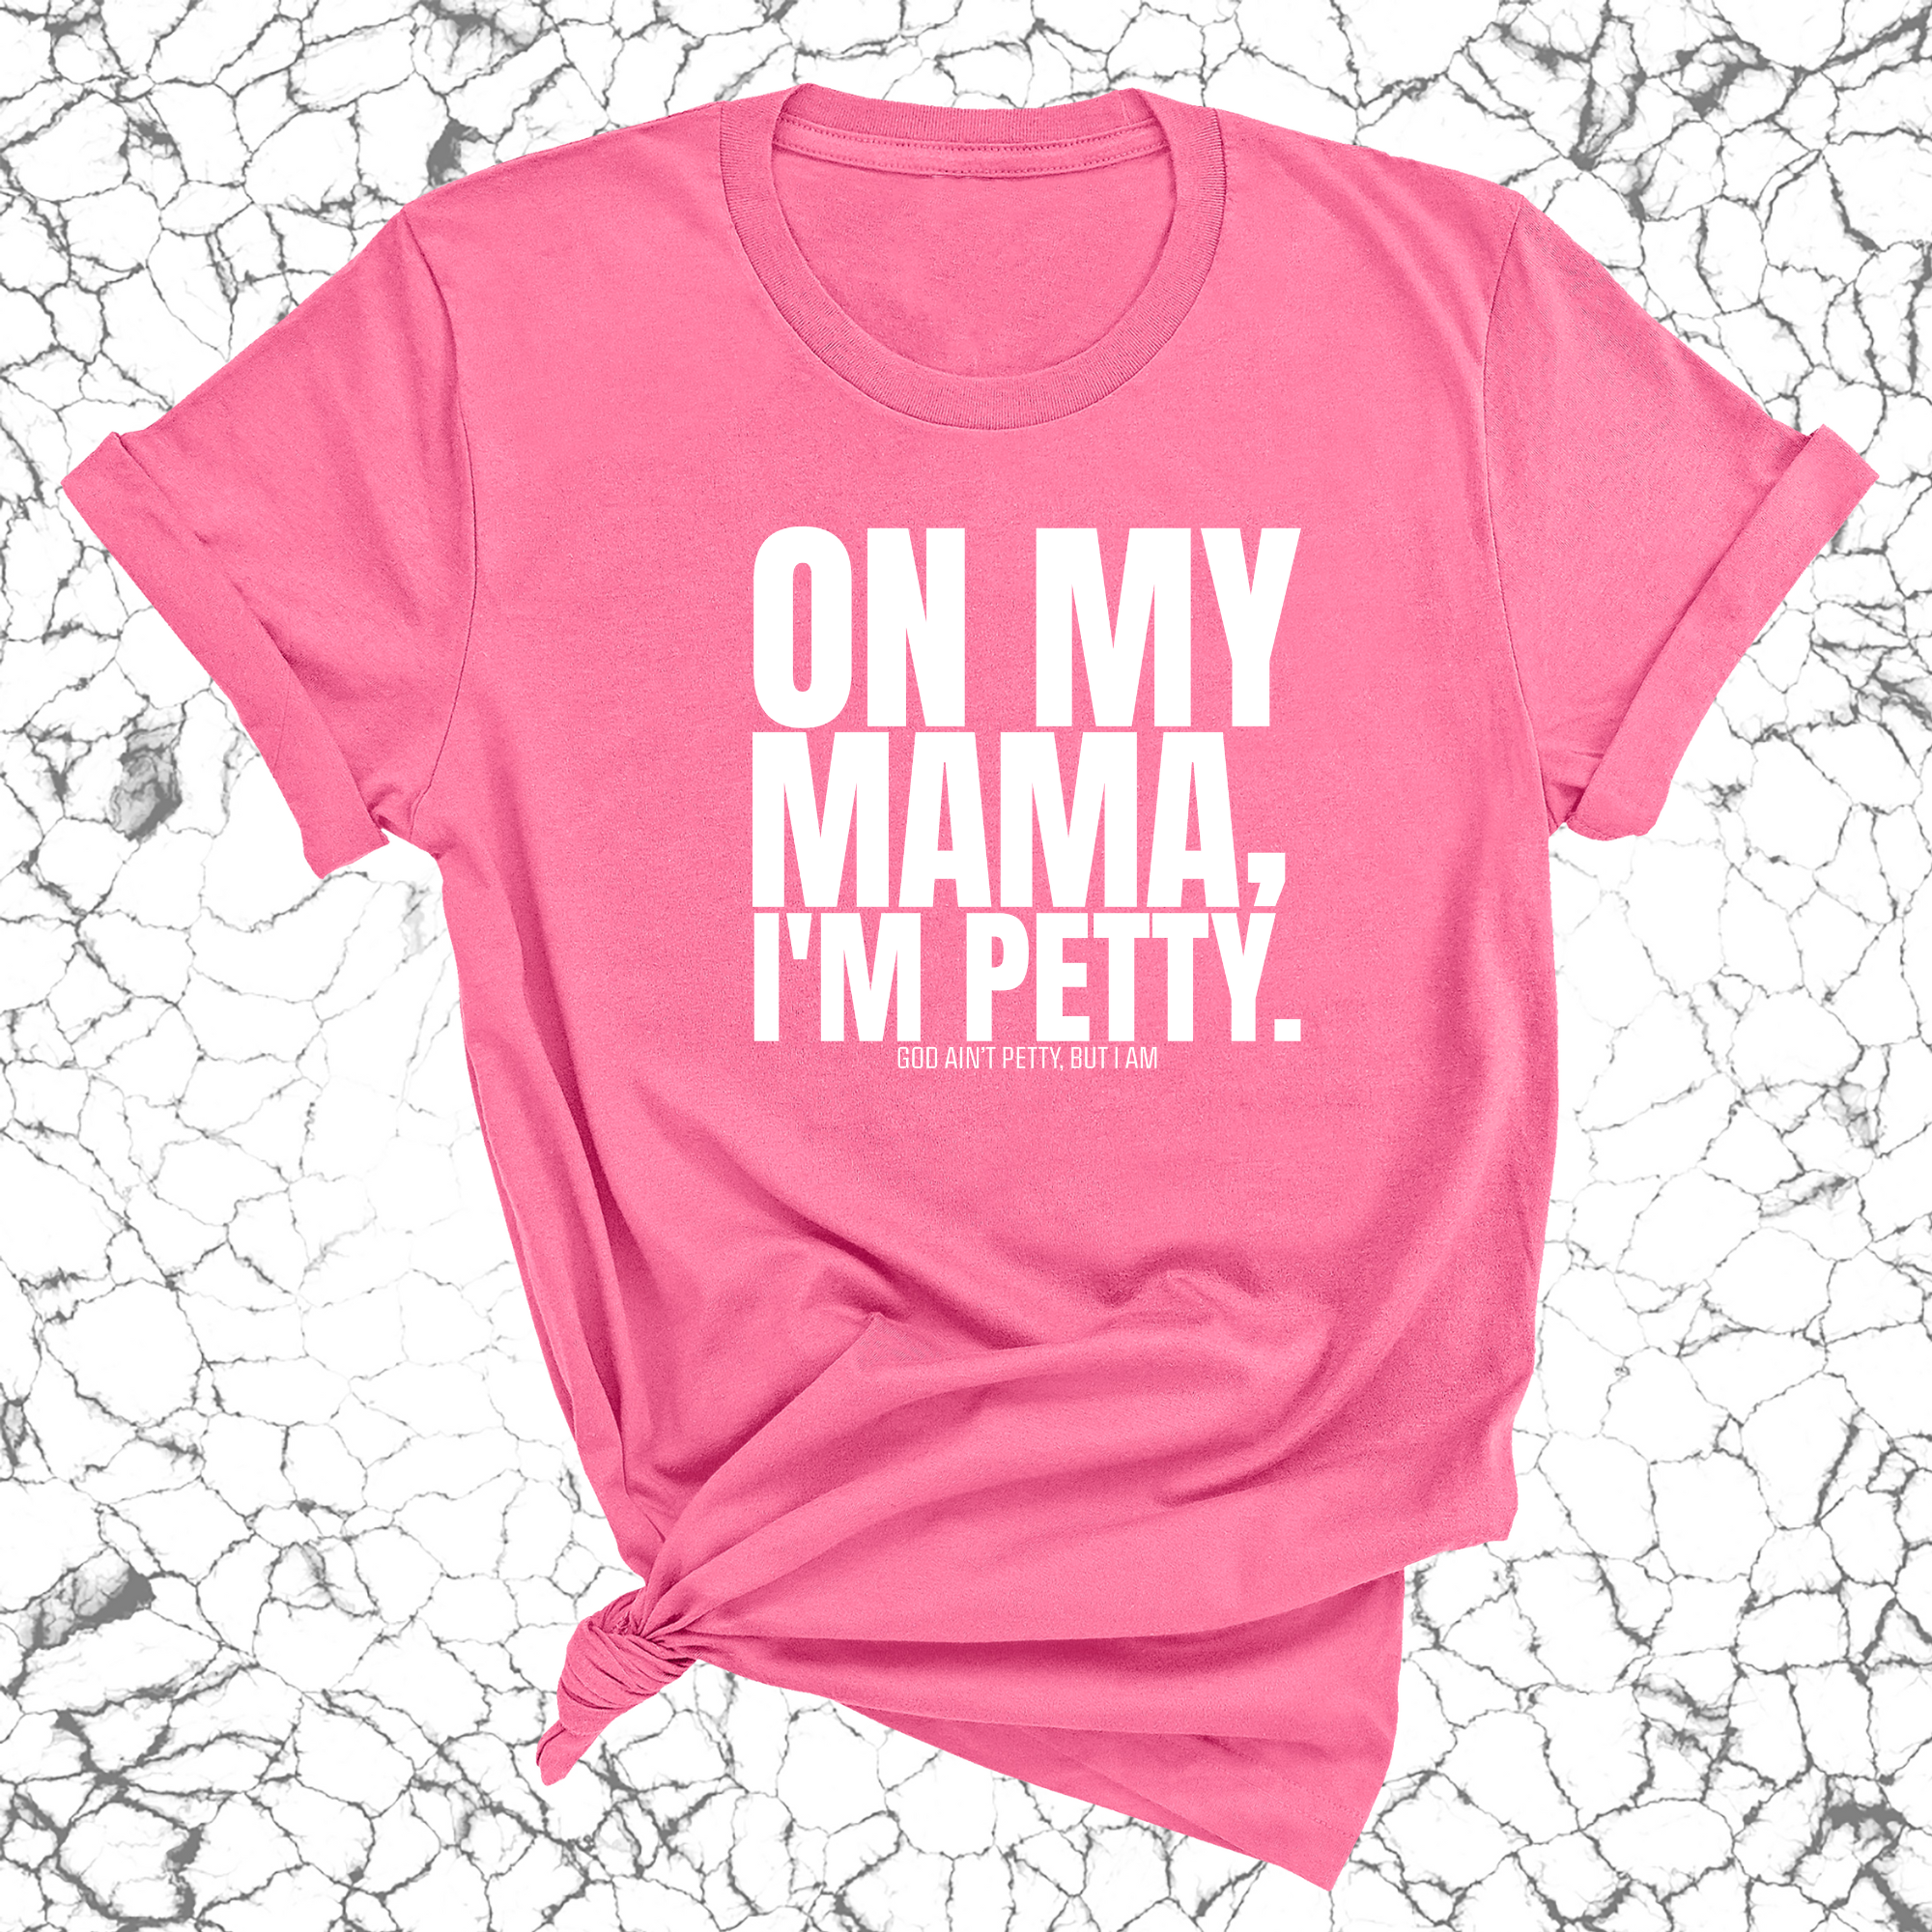 On my Mama I'm Petty Unisex Tee-T-Shirt-The Original God Ain't Petty But I Am